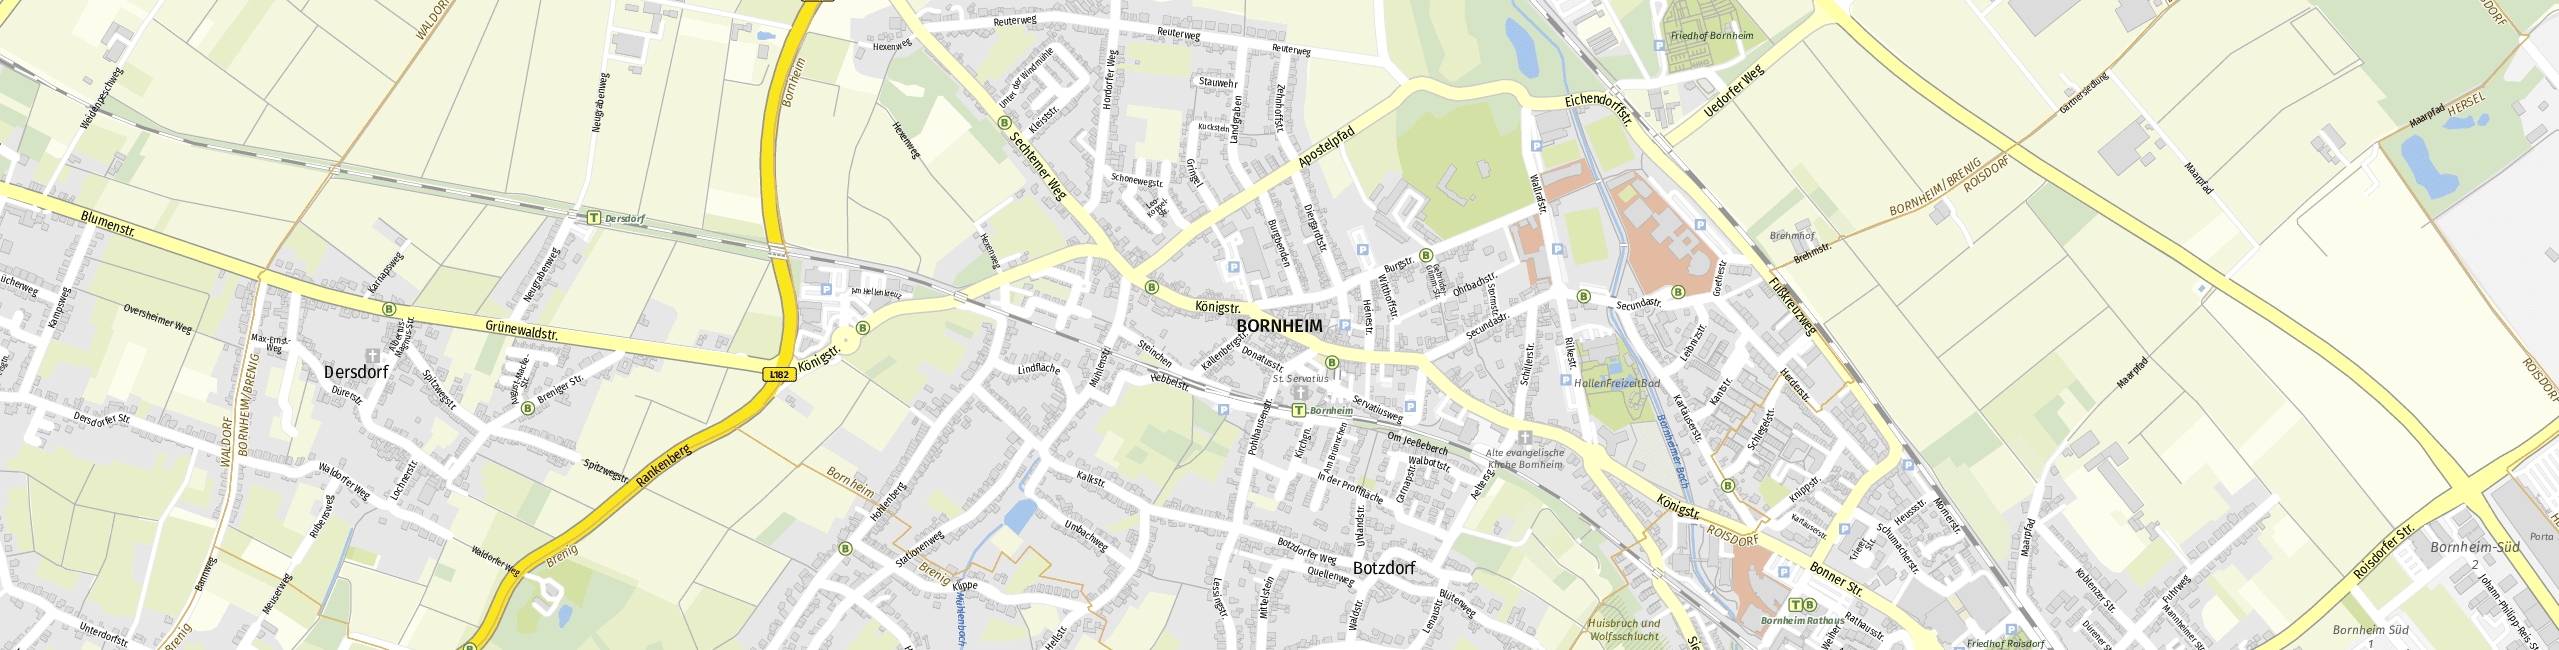 Stadtplan Bornheim zum Downloaden.